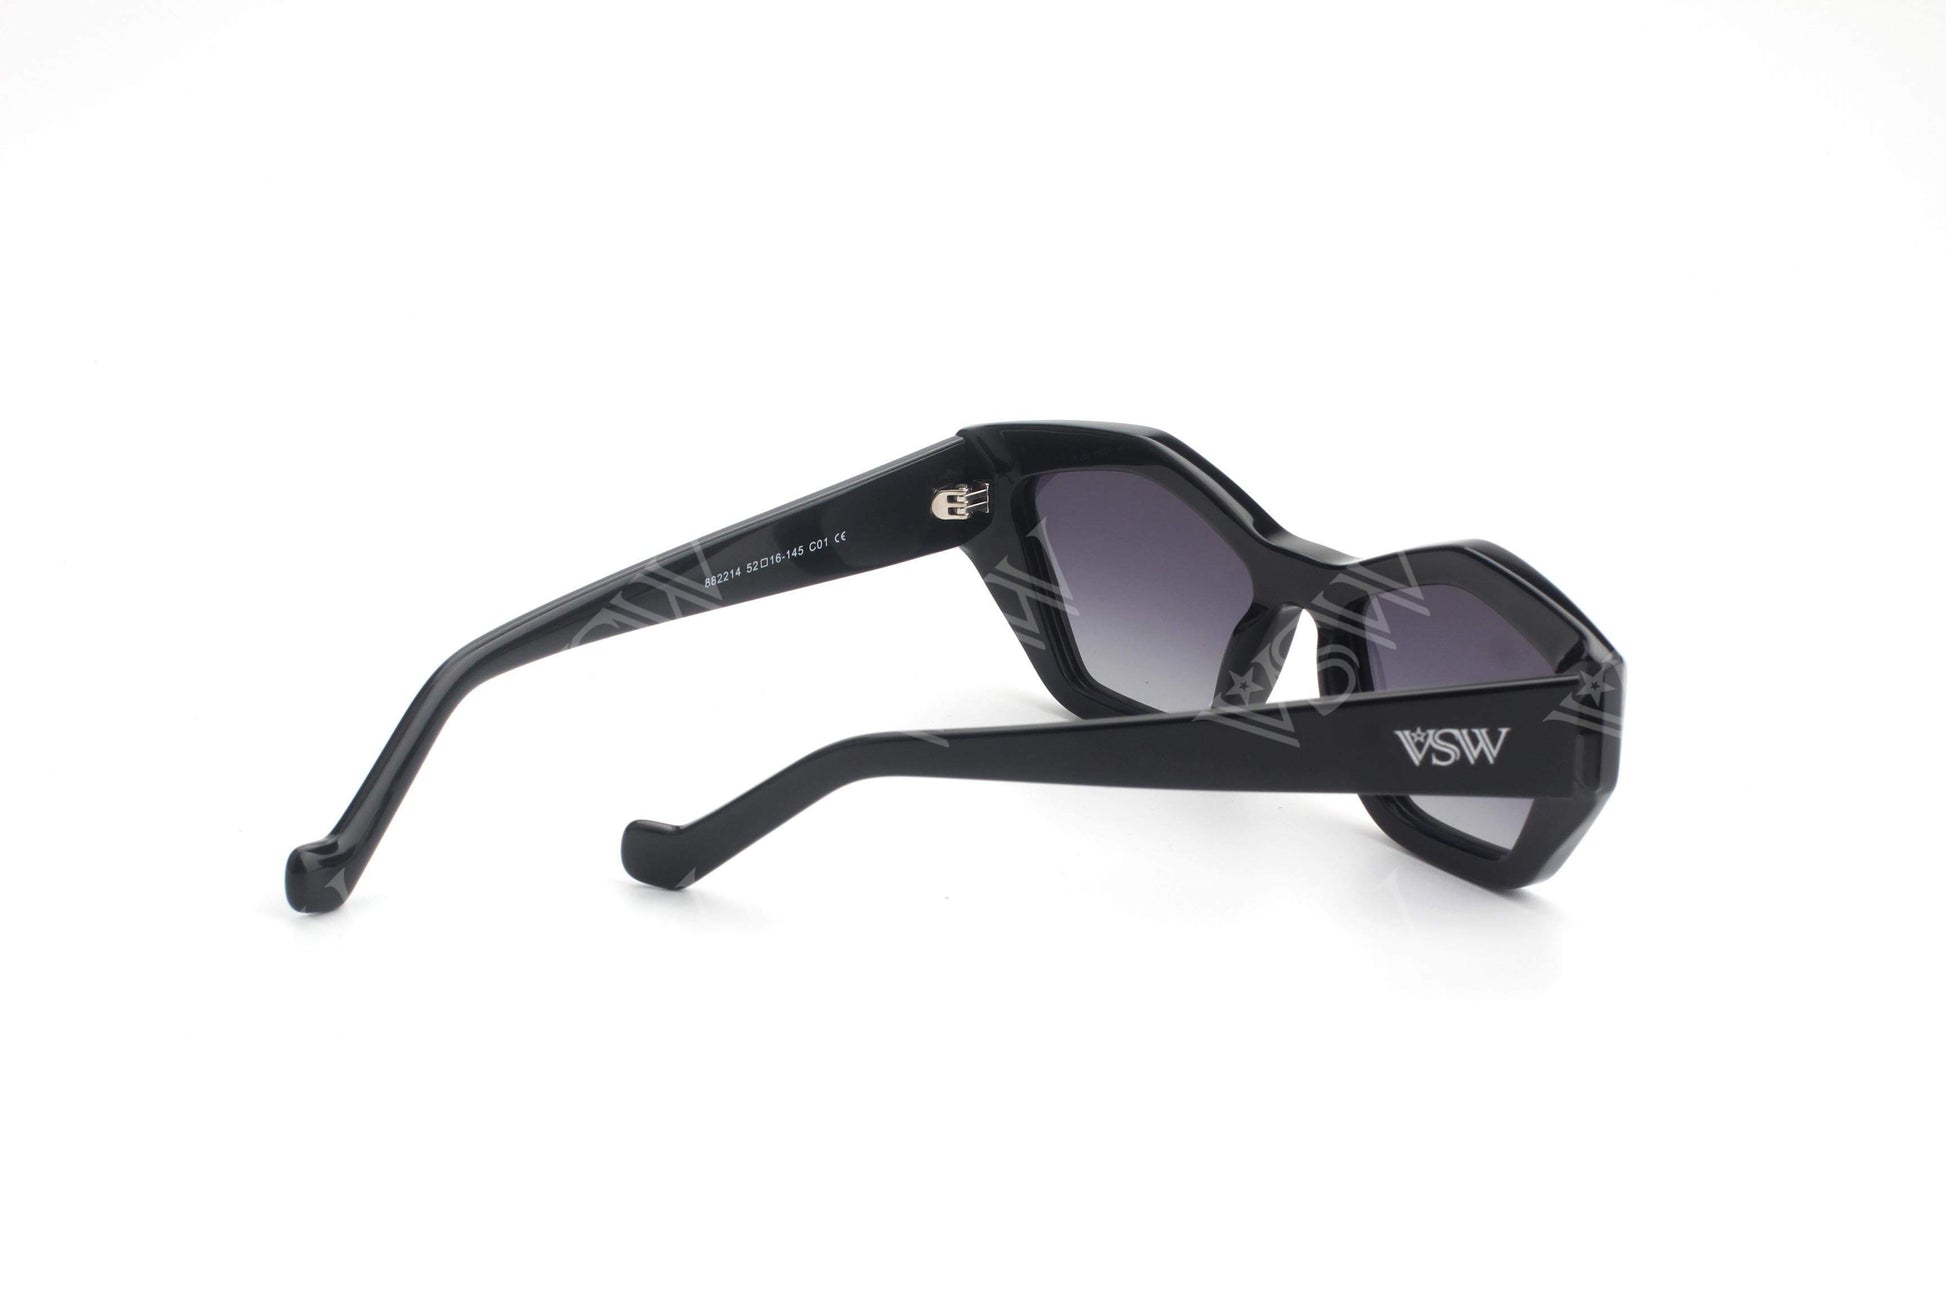 Sunglass Marshall - Sunglasses from [store] by VSW - women sunglasses